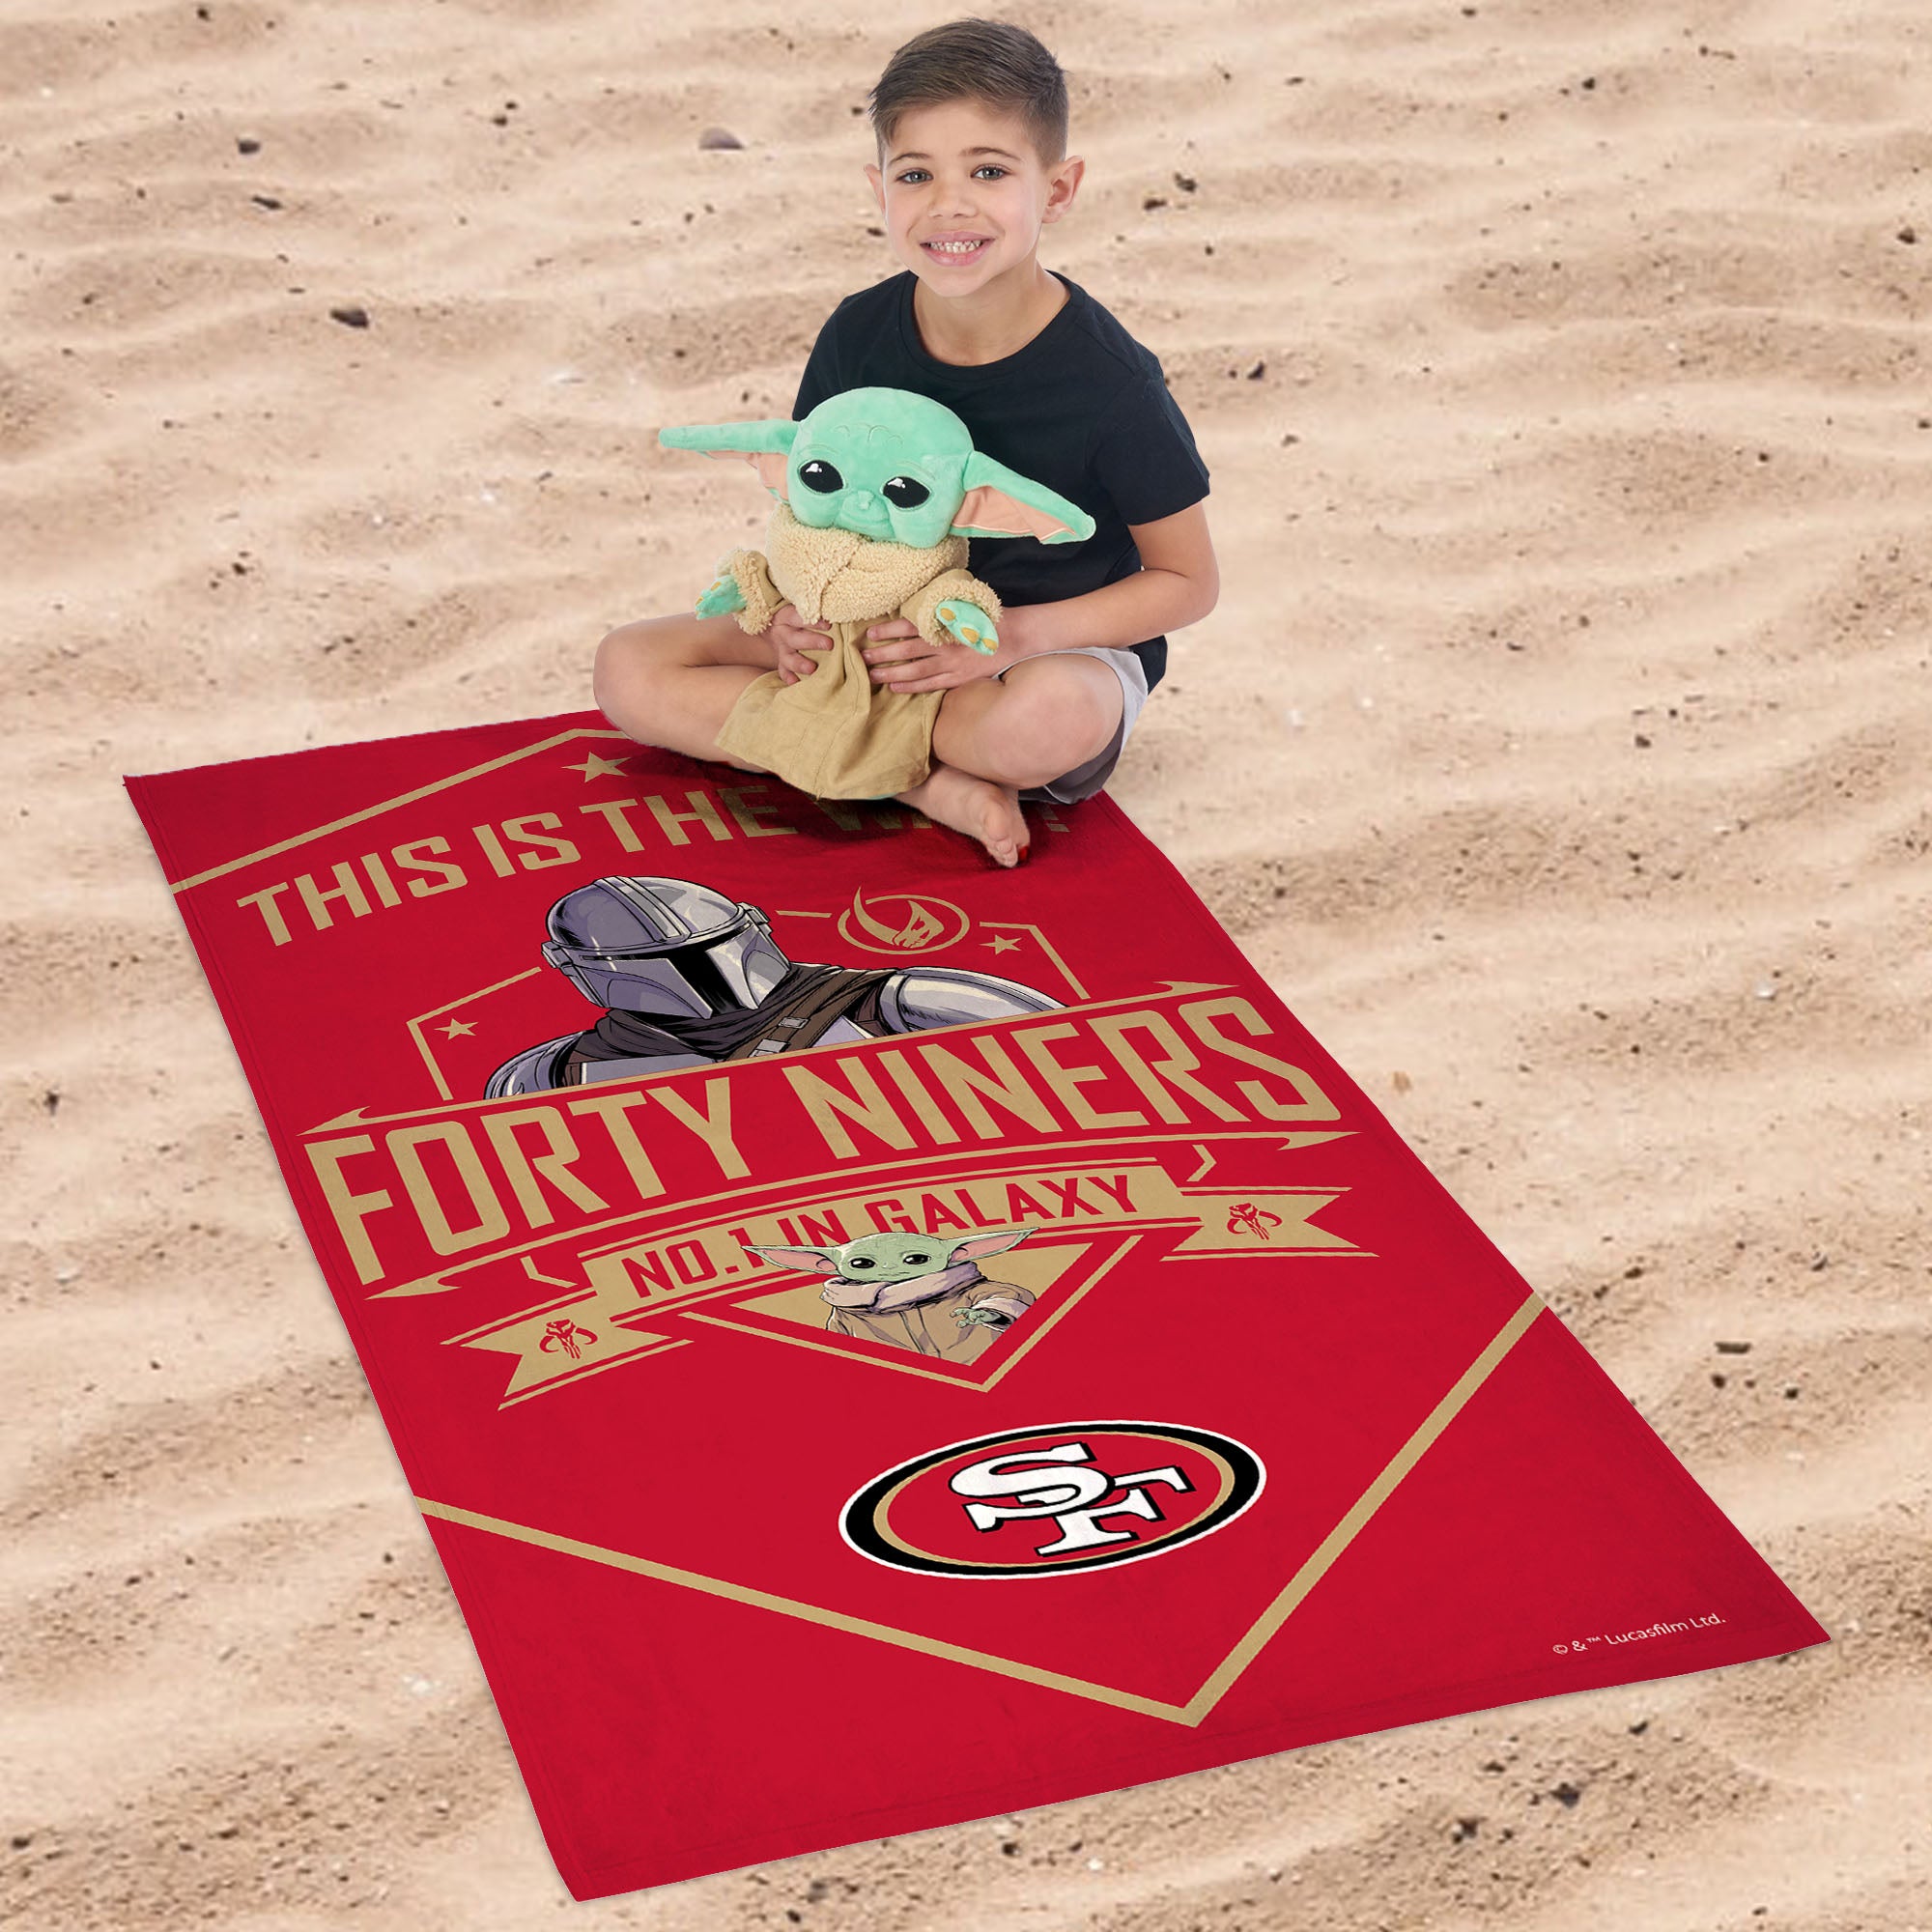 Star Wars NFL San Francisco 49ers Shield Hugger Beach Towel Set